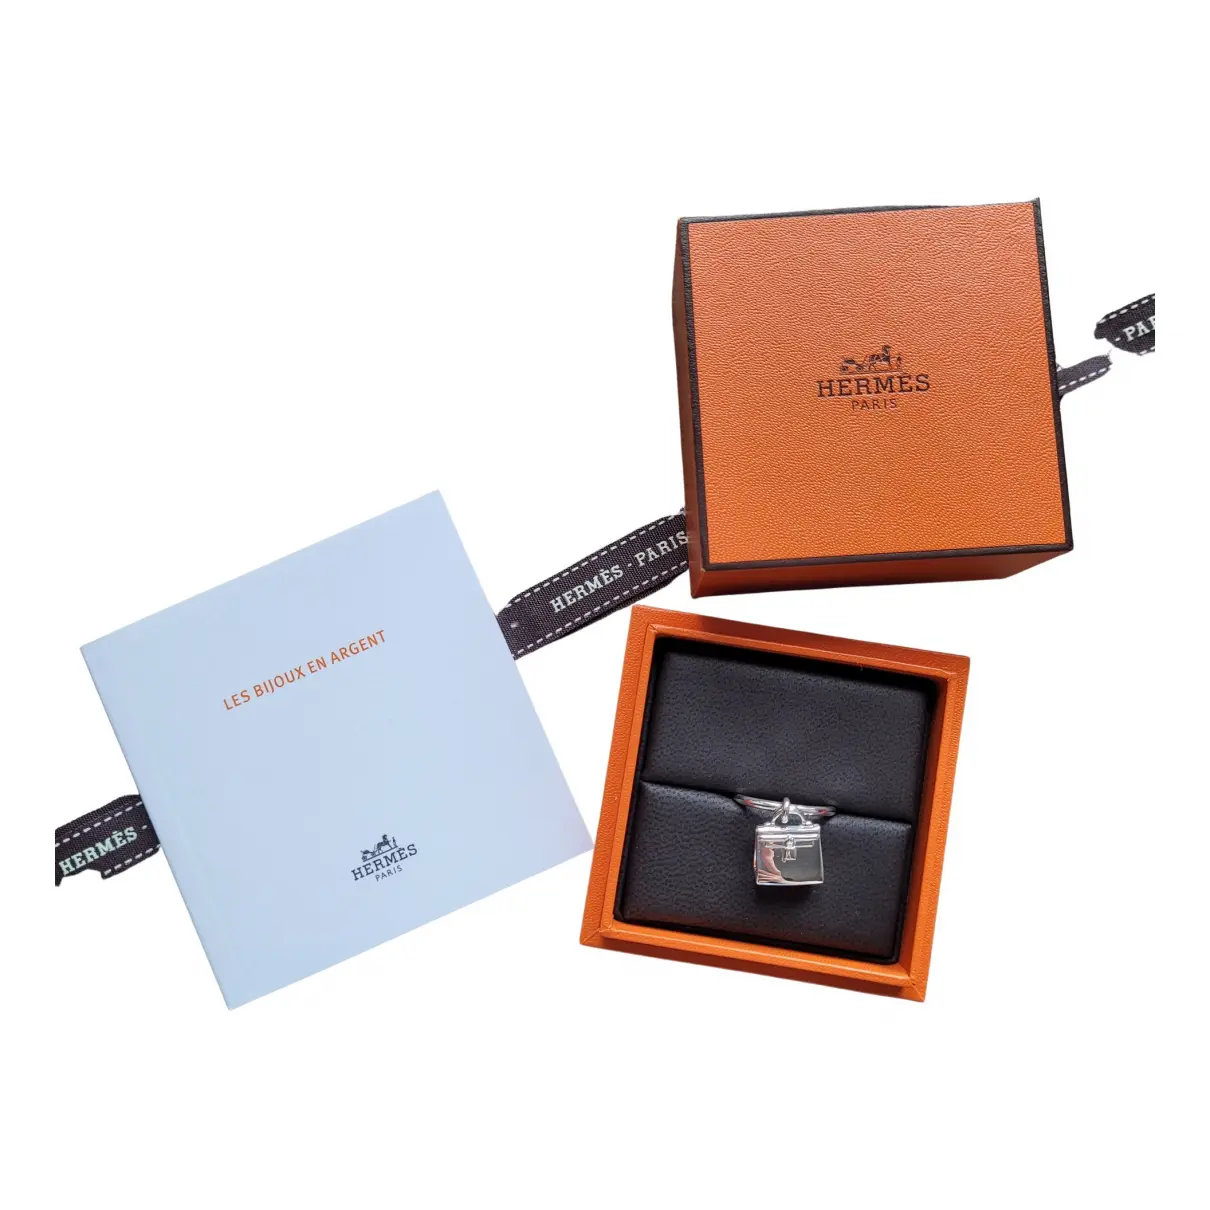 Buy Hermès Amulette silver ring online